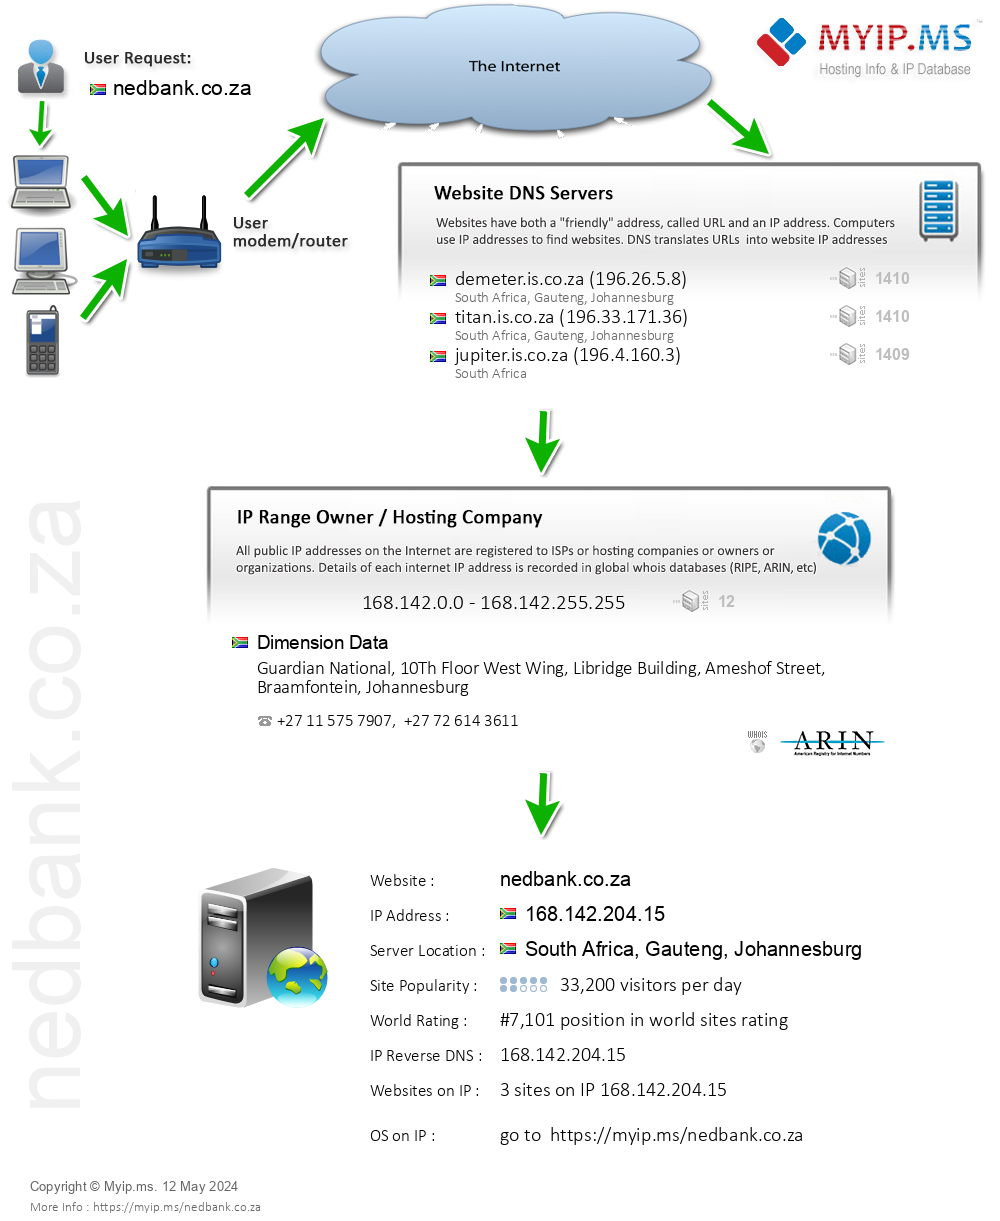 Nedbank.co.za - Website Hosting Visual IP Diagram